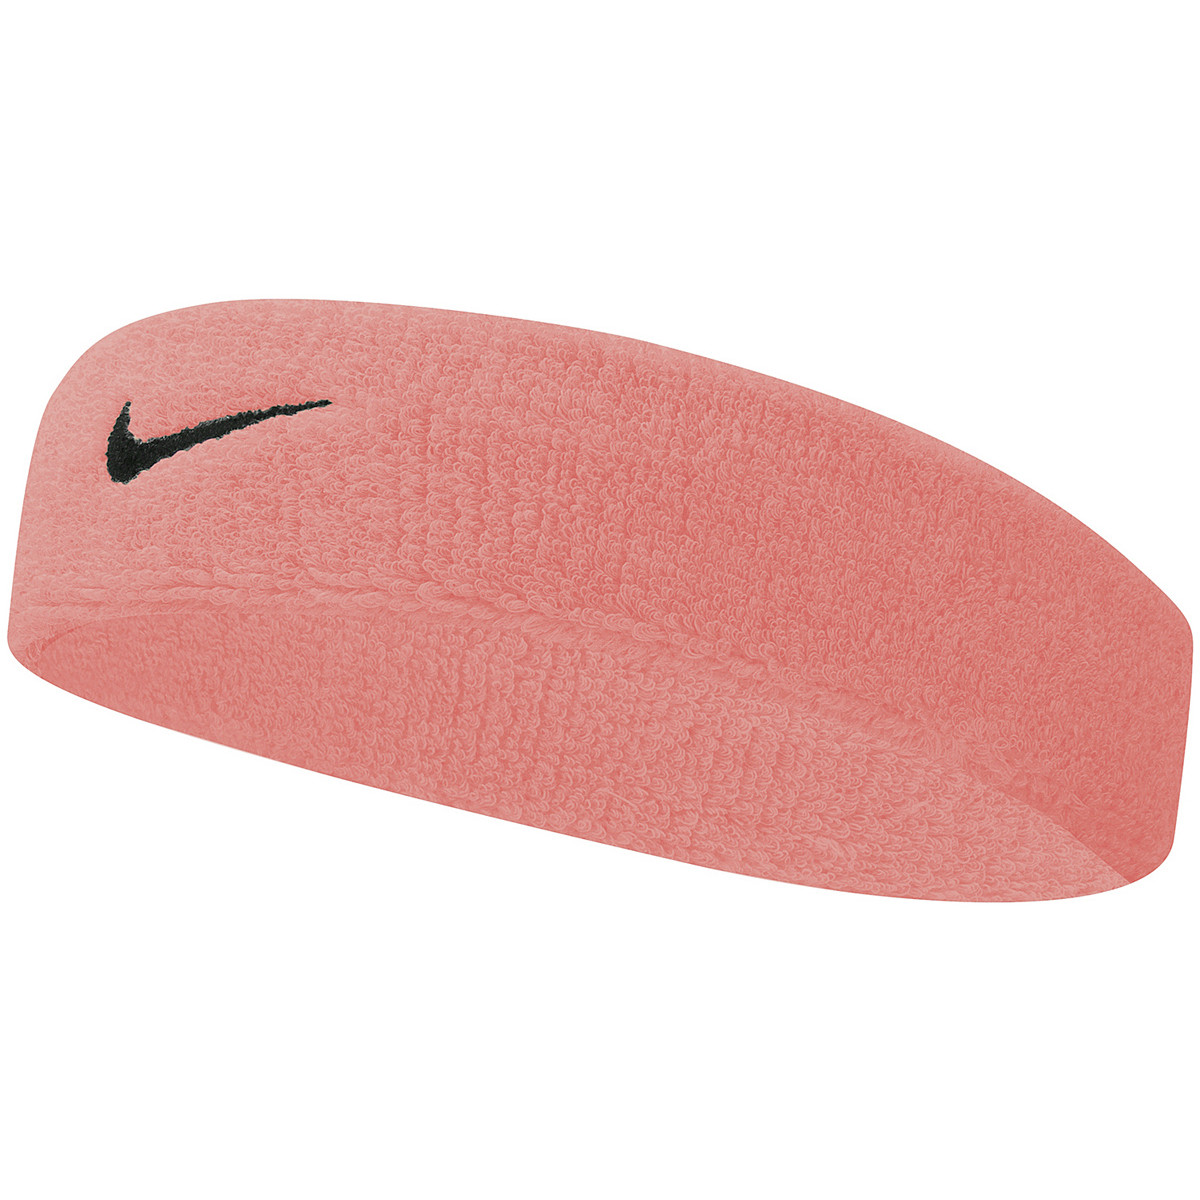 Bandeau Nike Swoosh Rouge - Bandeau, bandana - Tennis Achat